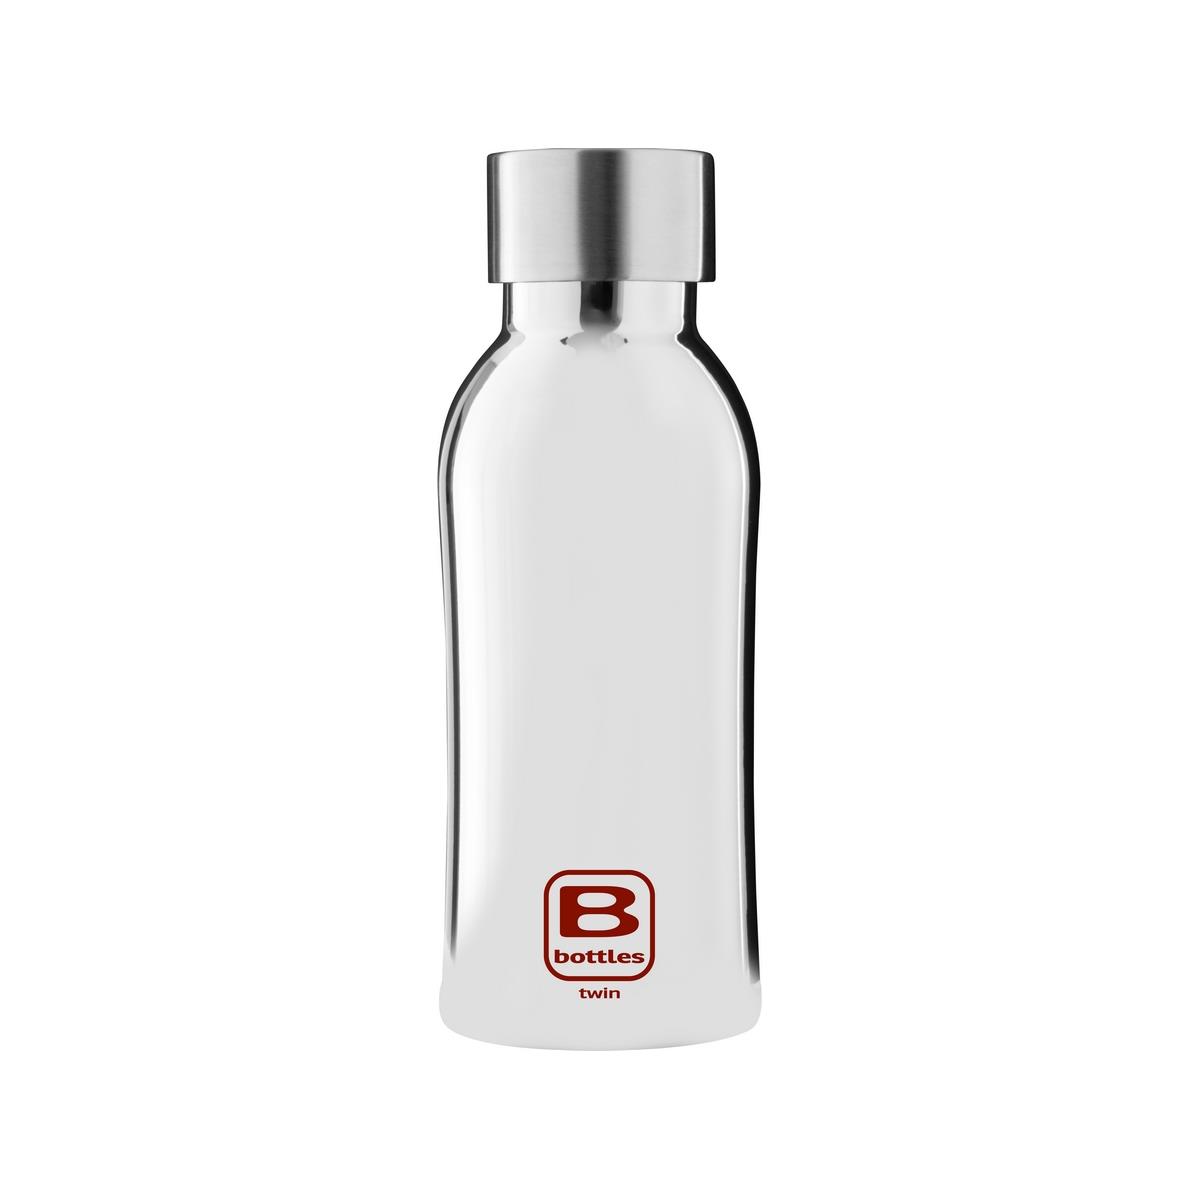 B Bottles Twin - Silver Lux - 350 ml - Garrafa térmica de parede dupla em aço inoxidável 18/10